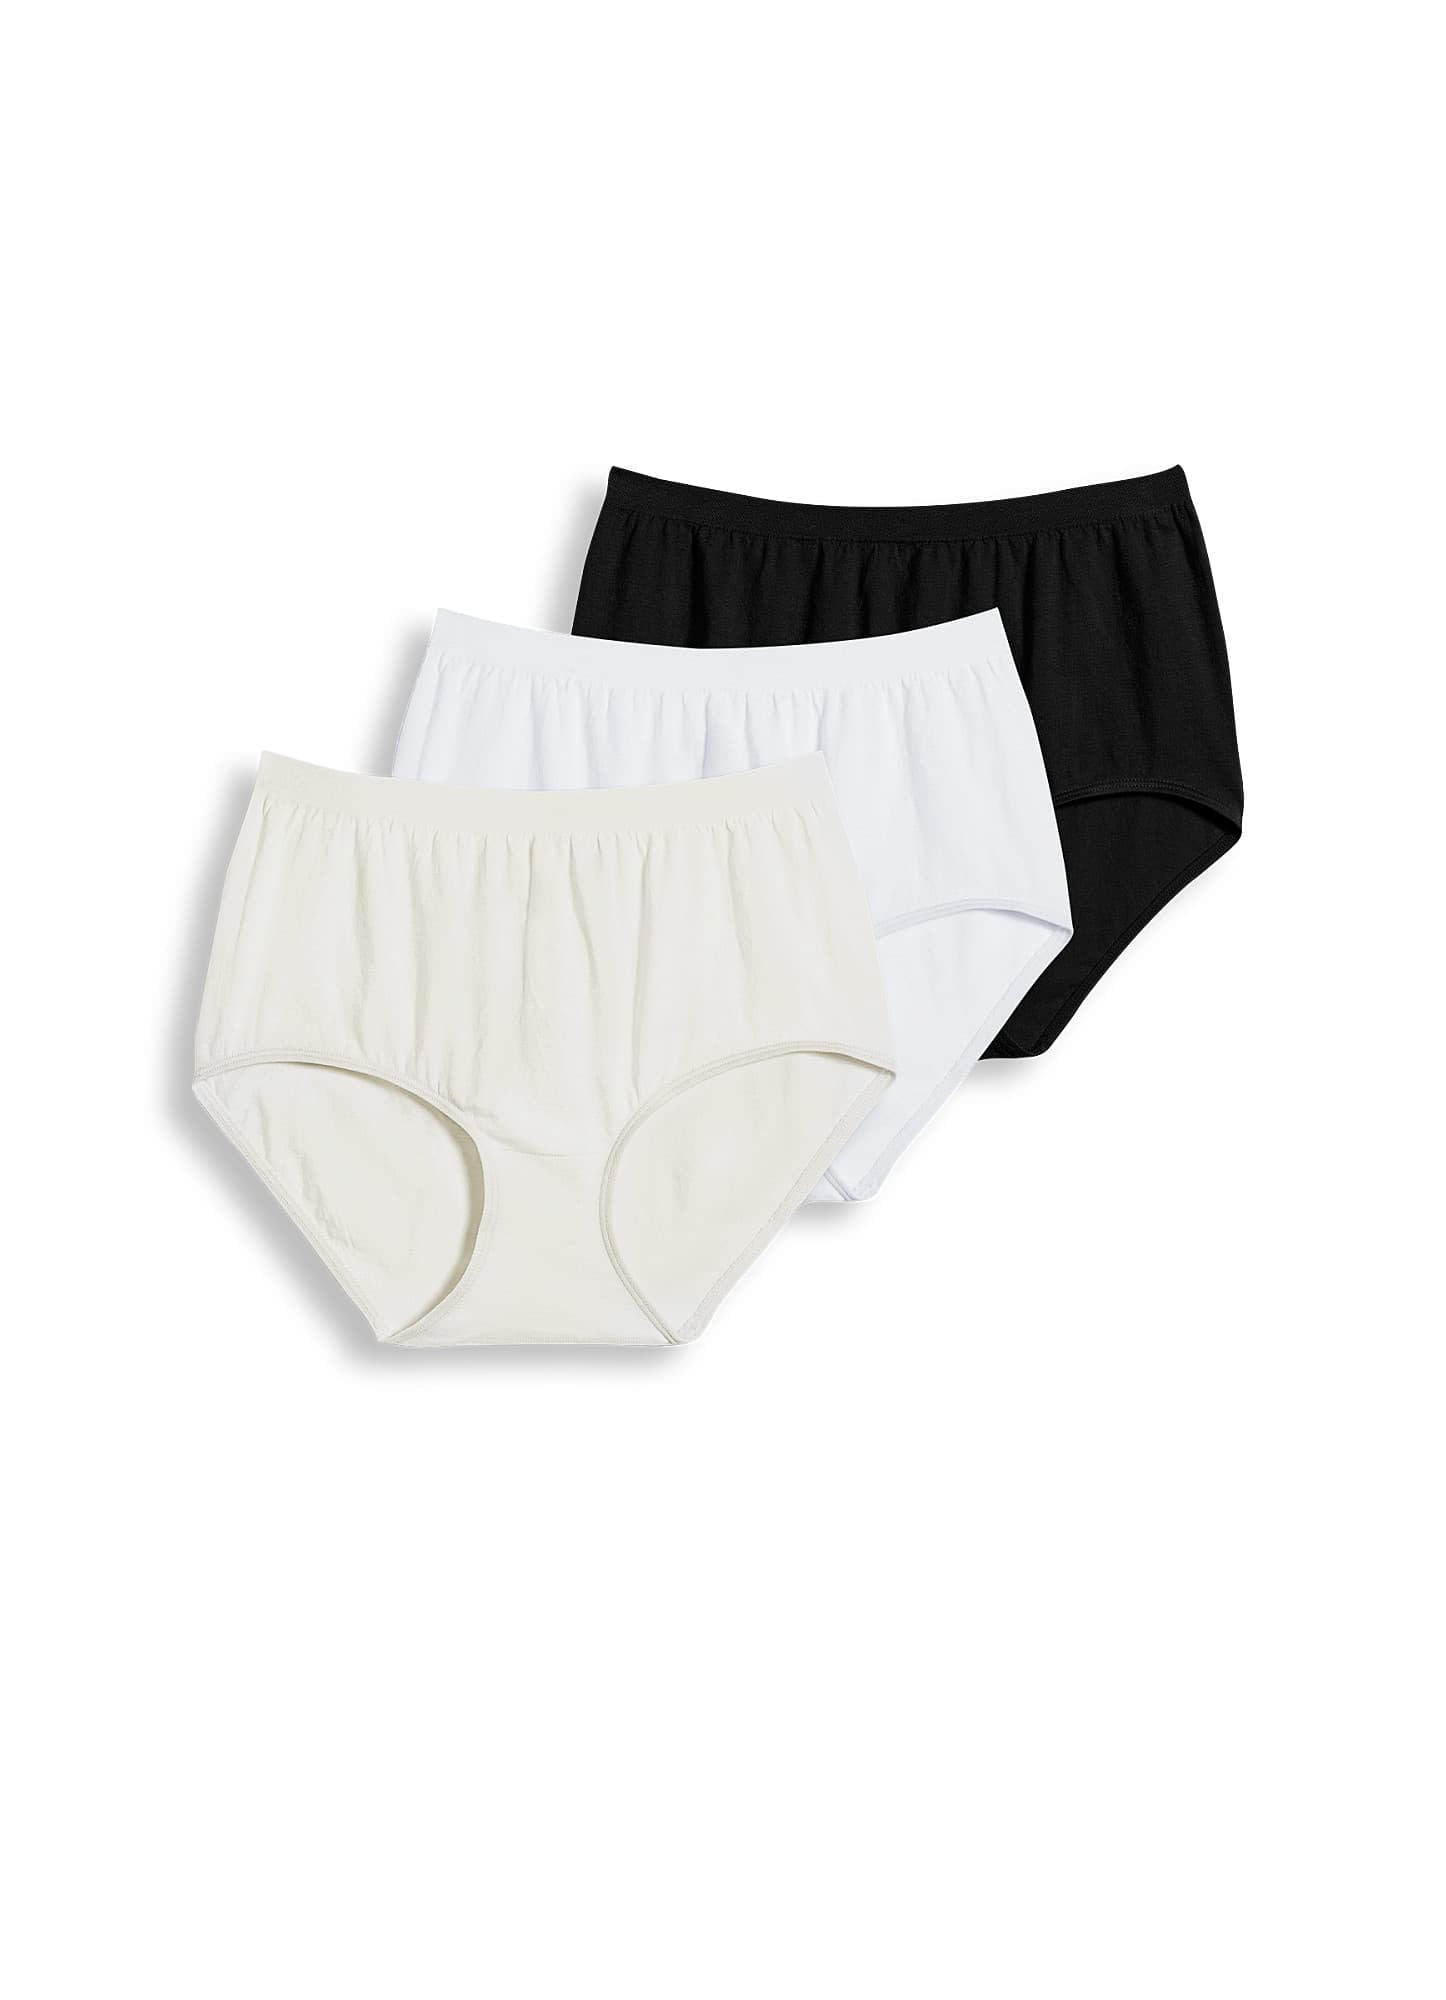 Jockey Women's Underwear Classic Brief - 3 Pack, Ivory, 5